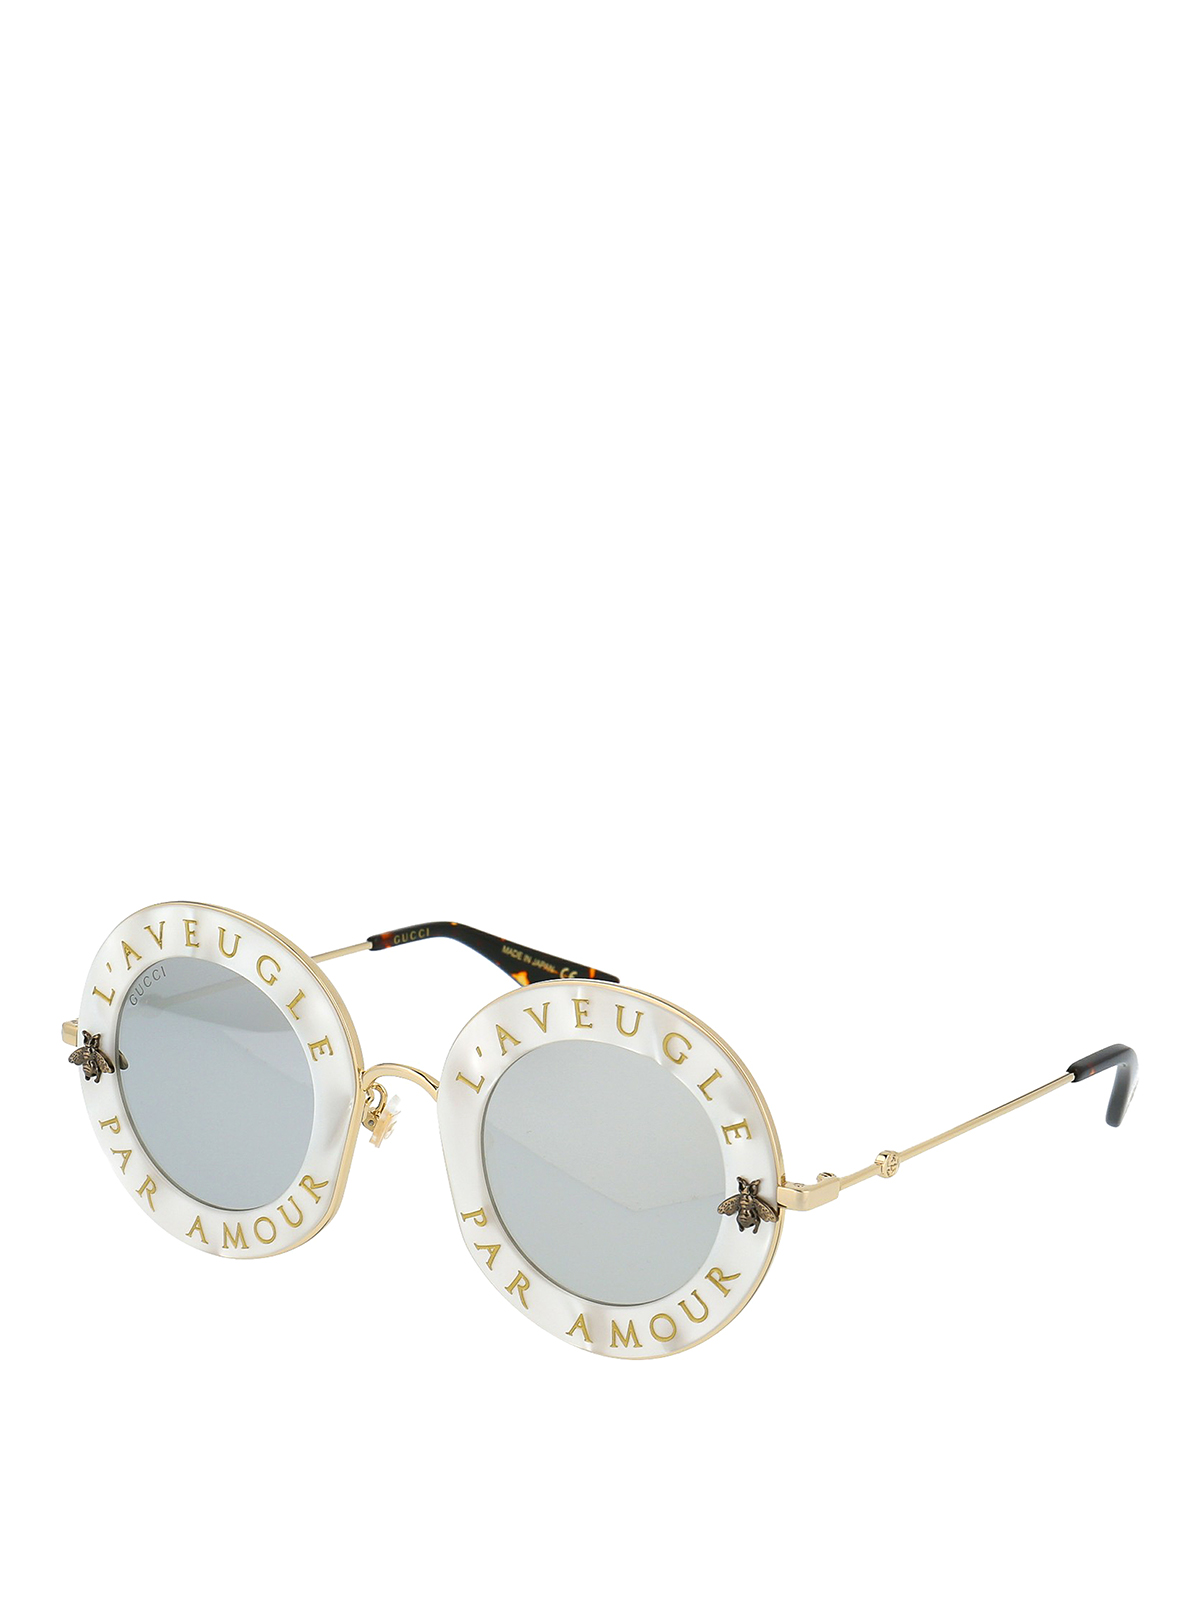 Sunglasses Gucci - L'Aveugle Par Amour sunglasses - GG0113S003 | iKRIX.com